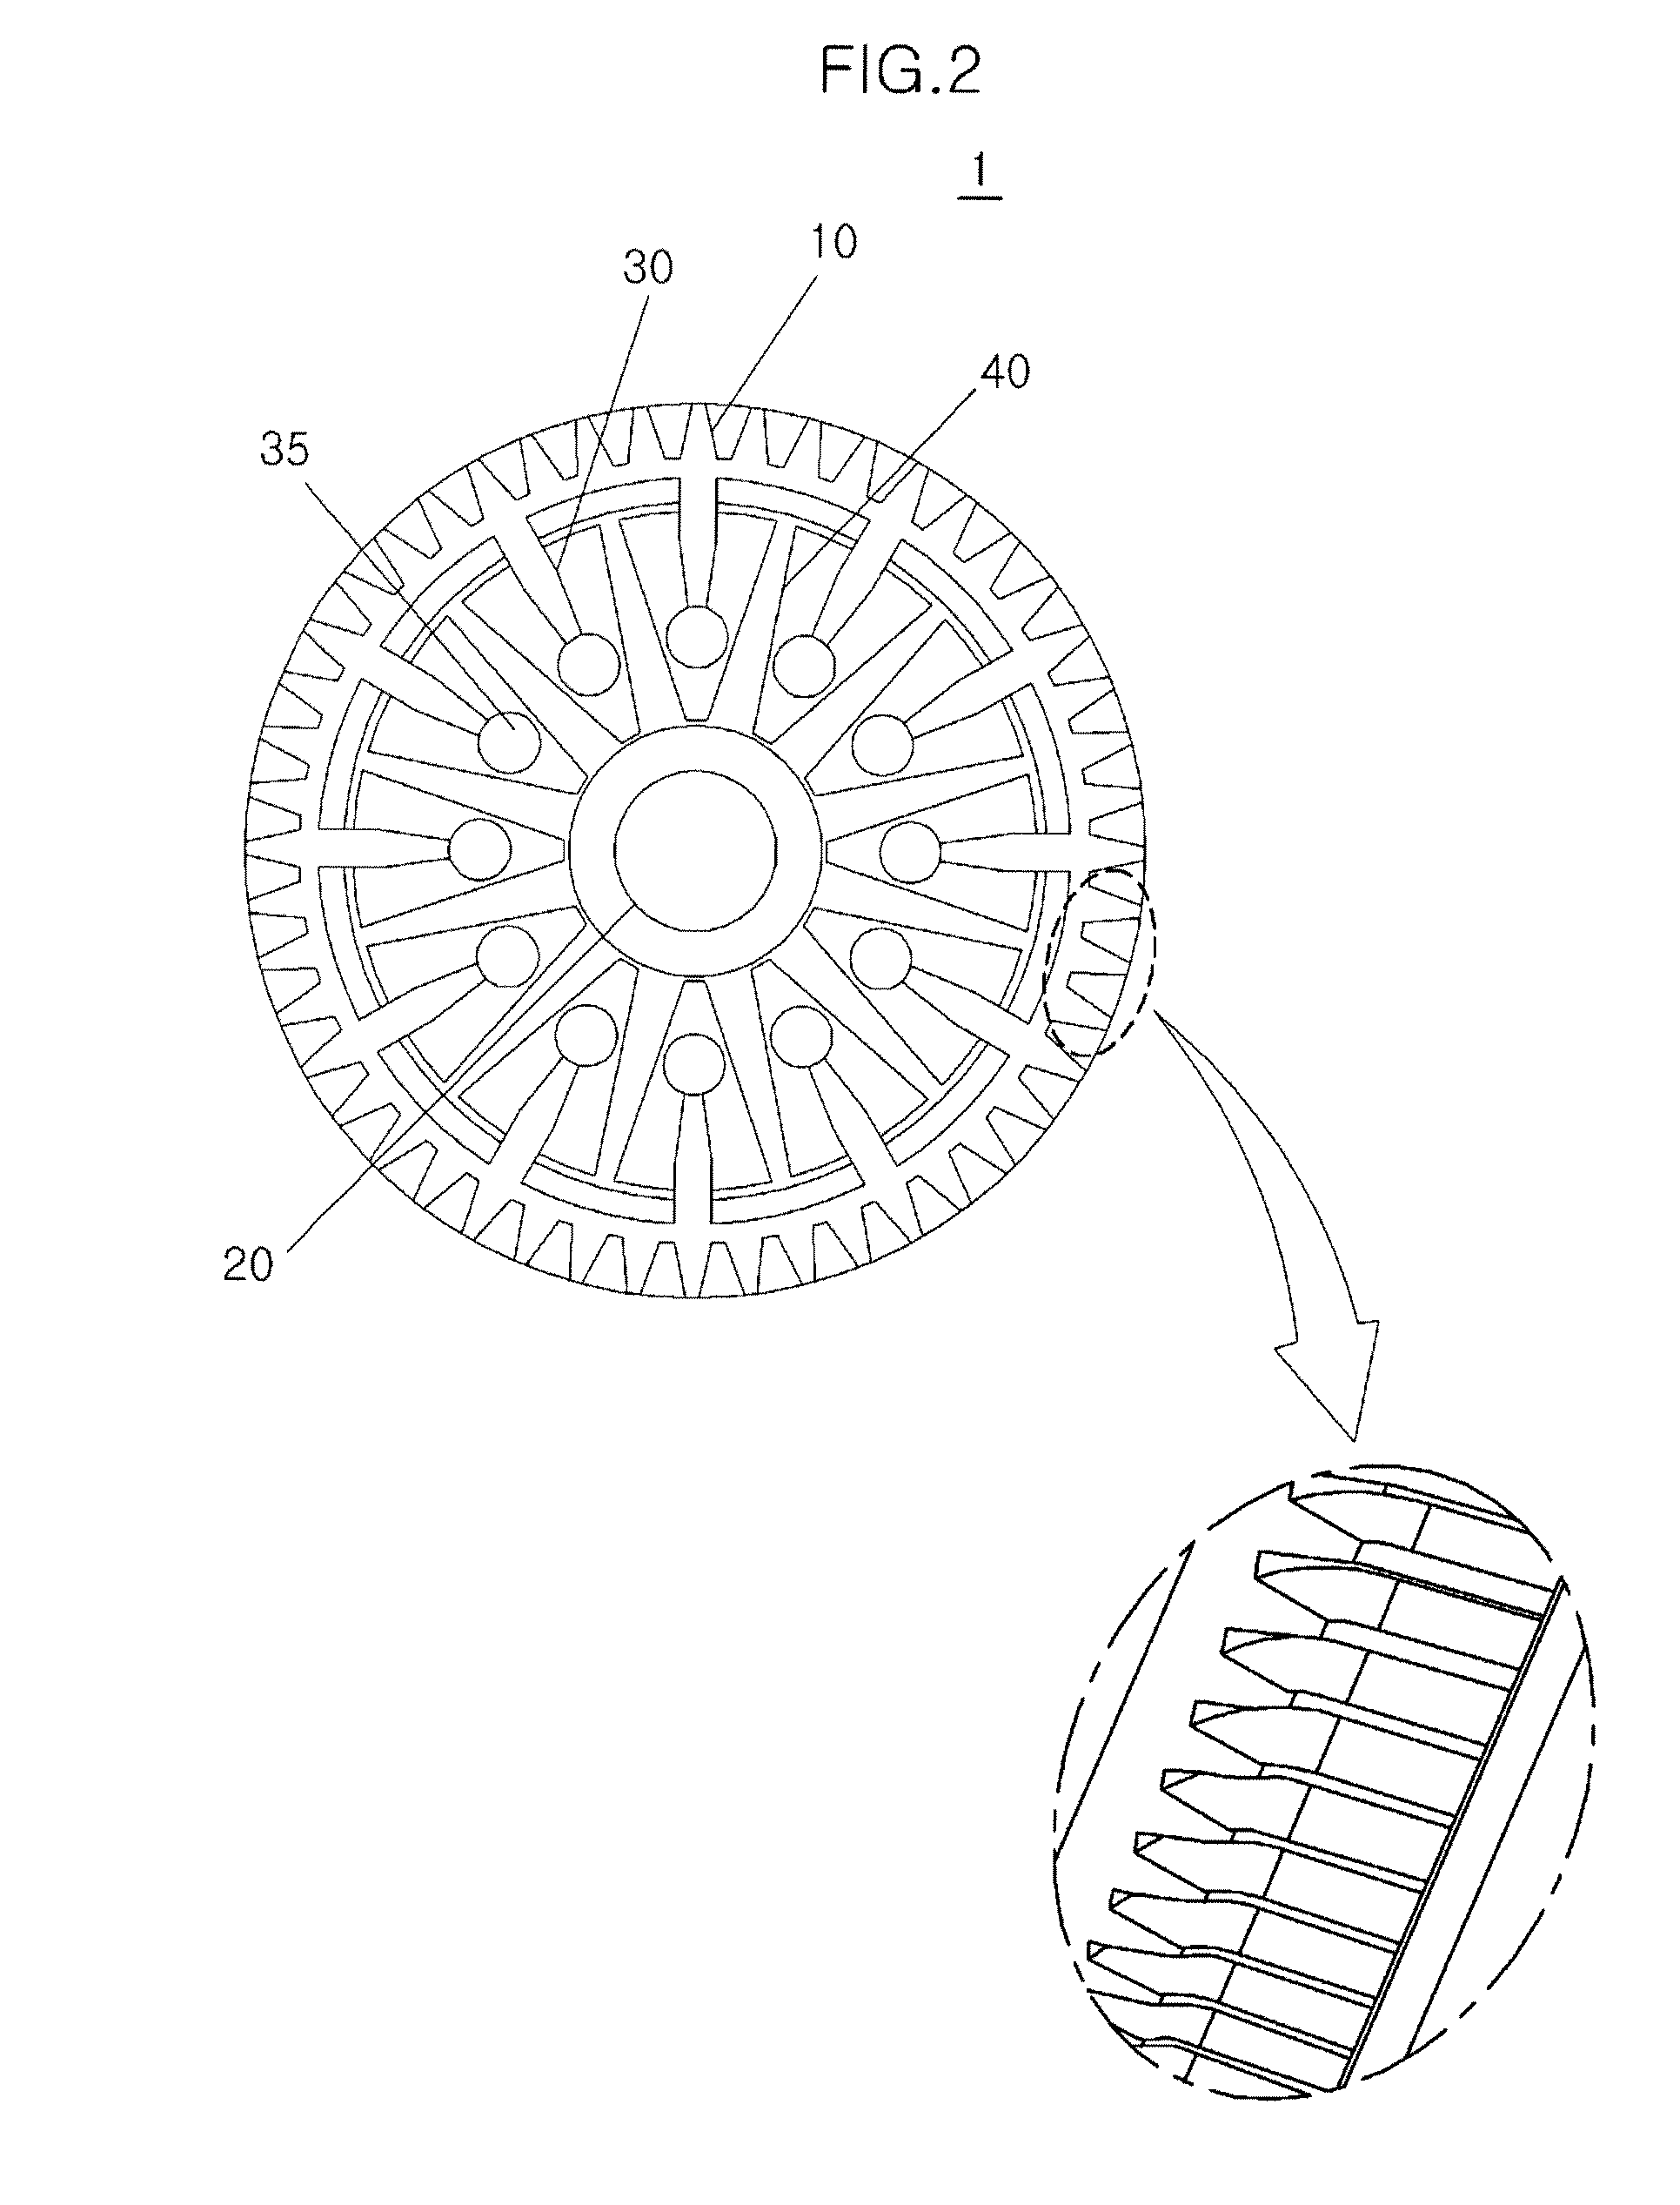 Worm wheel gear for BLDC motor